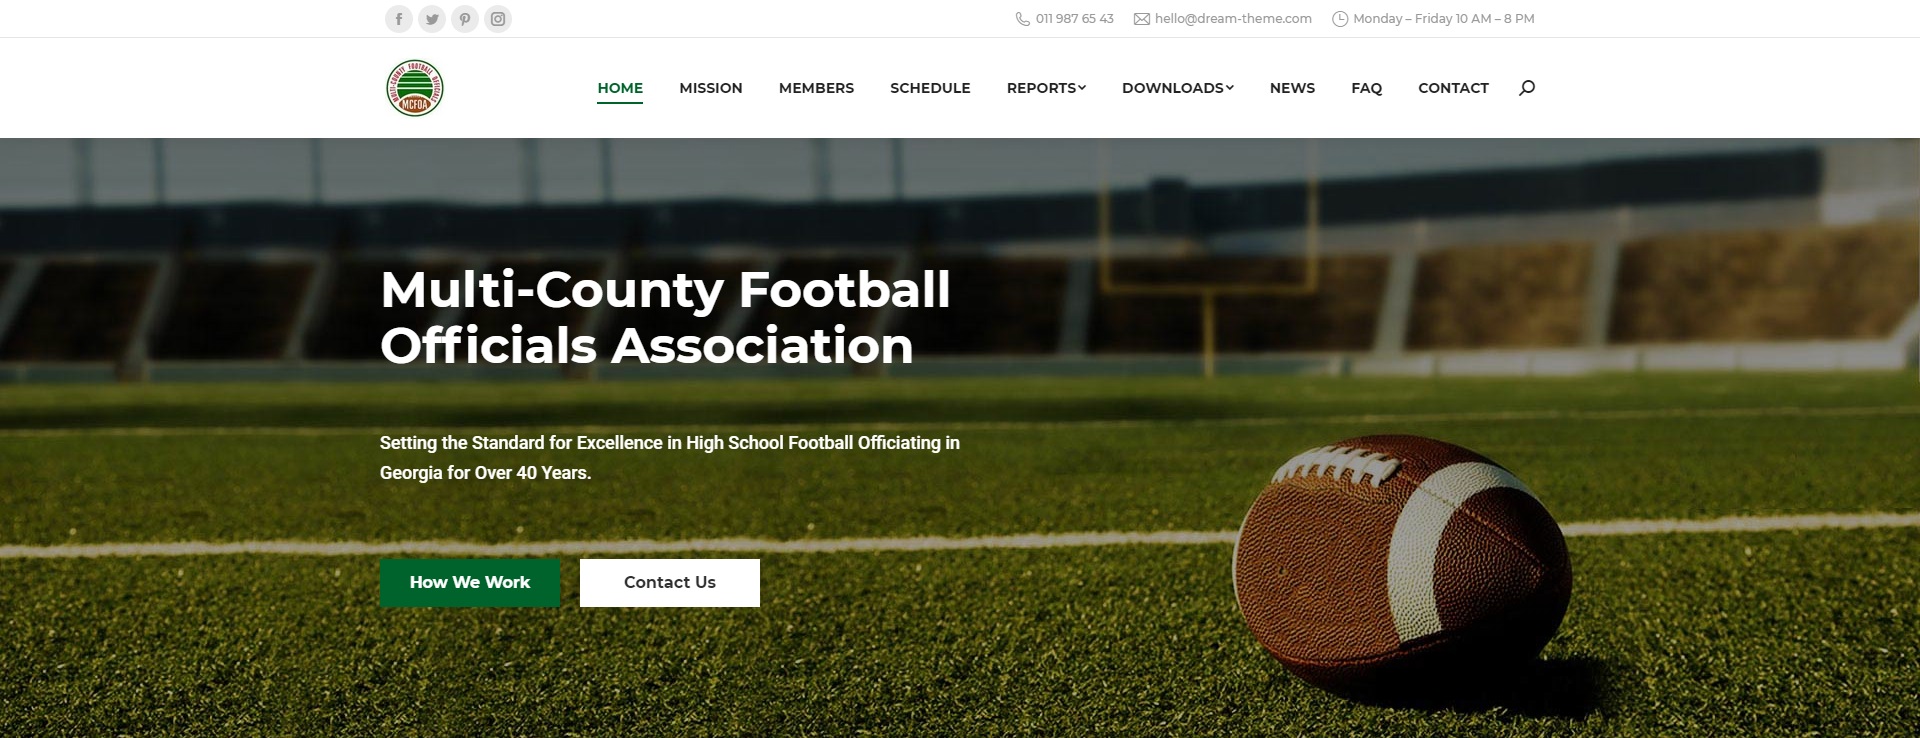 Multi-County Football Officials Association